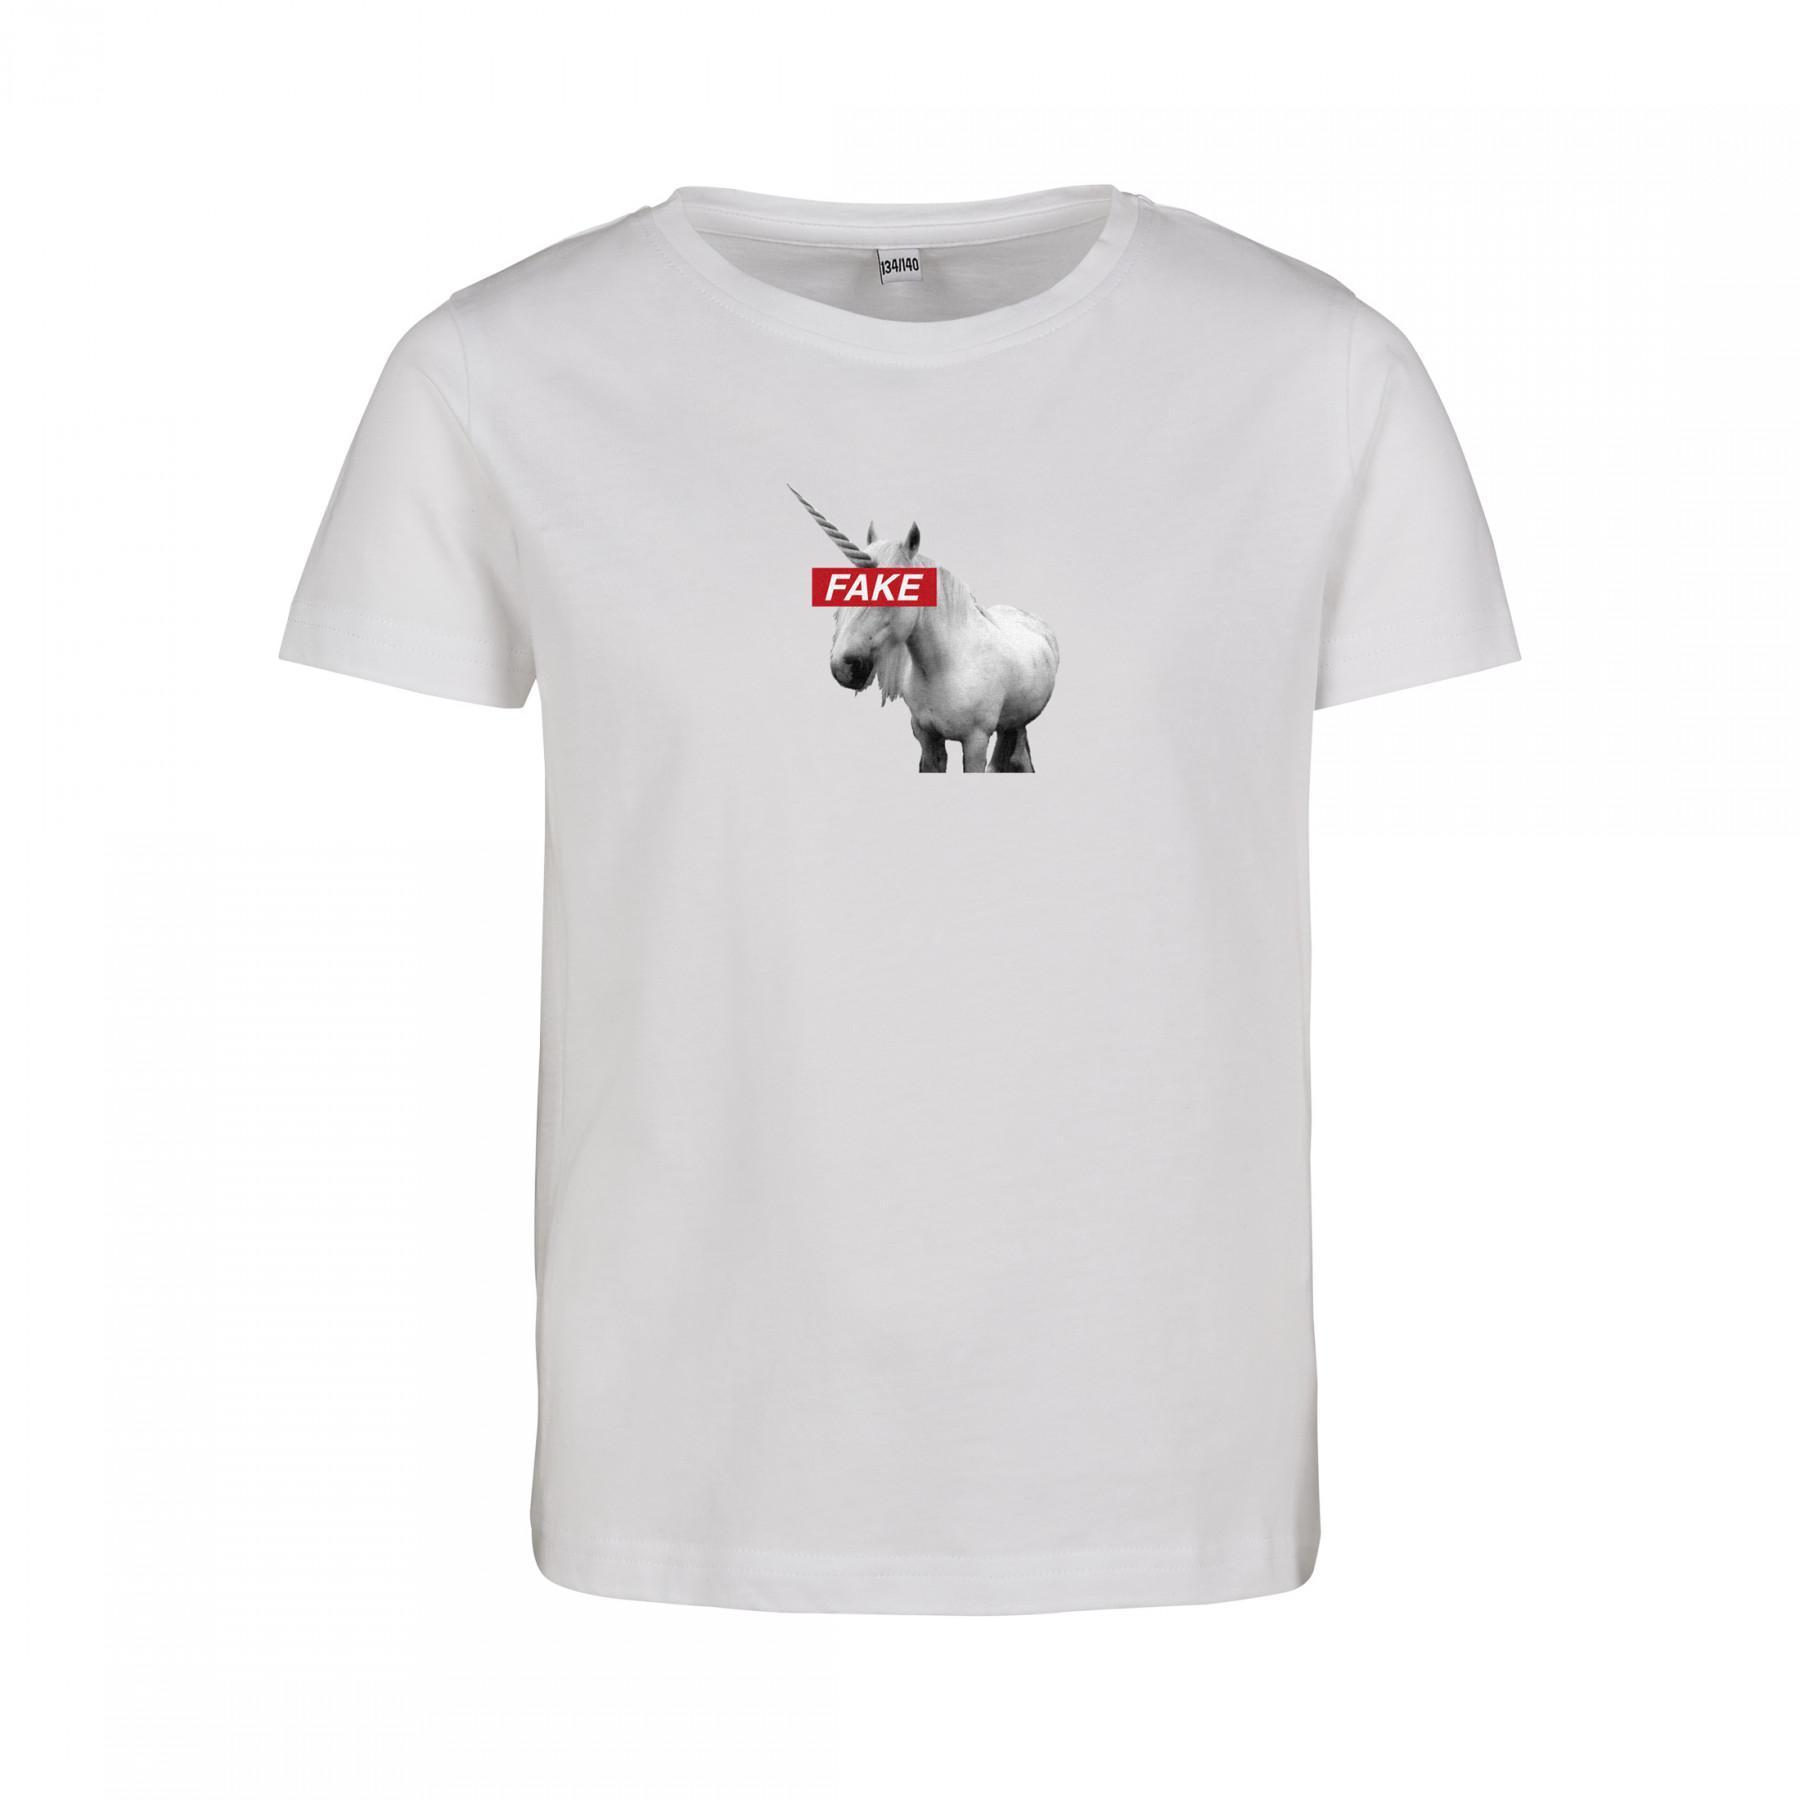 Child's T-shirt Mister Tee fake unicorn